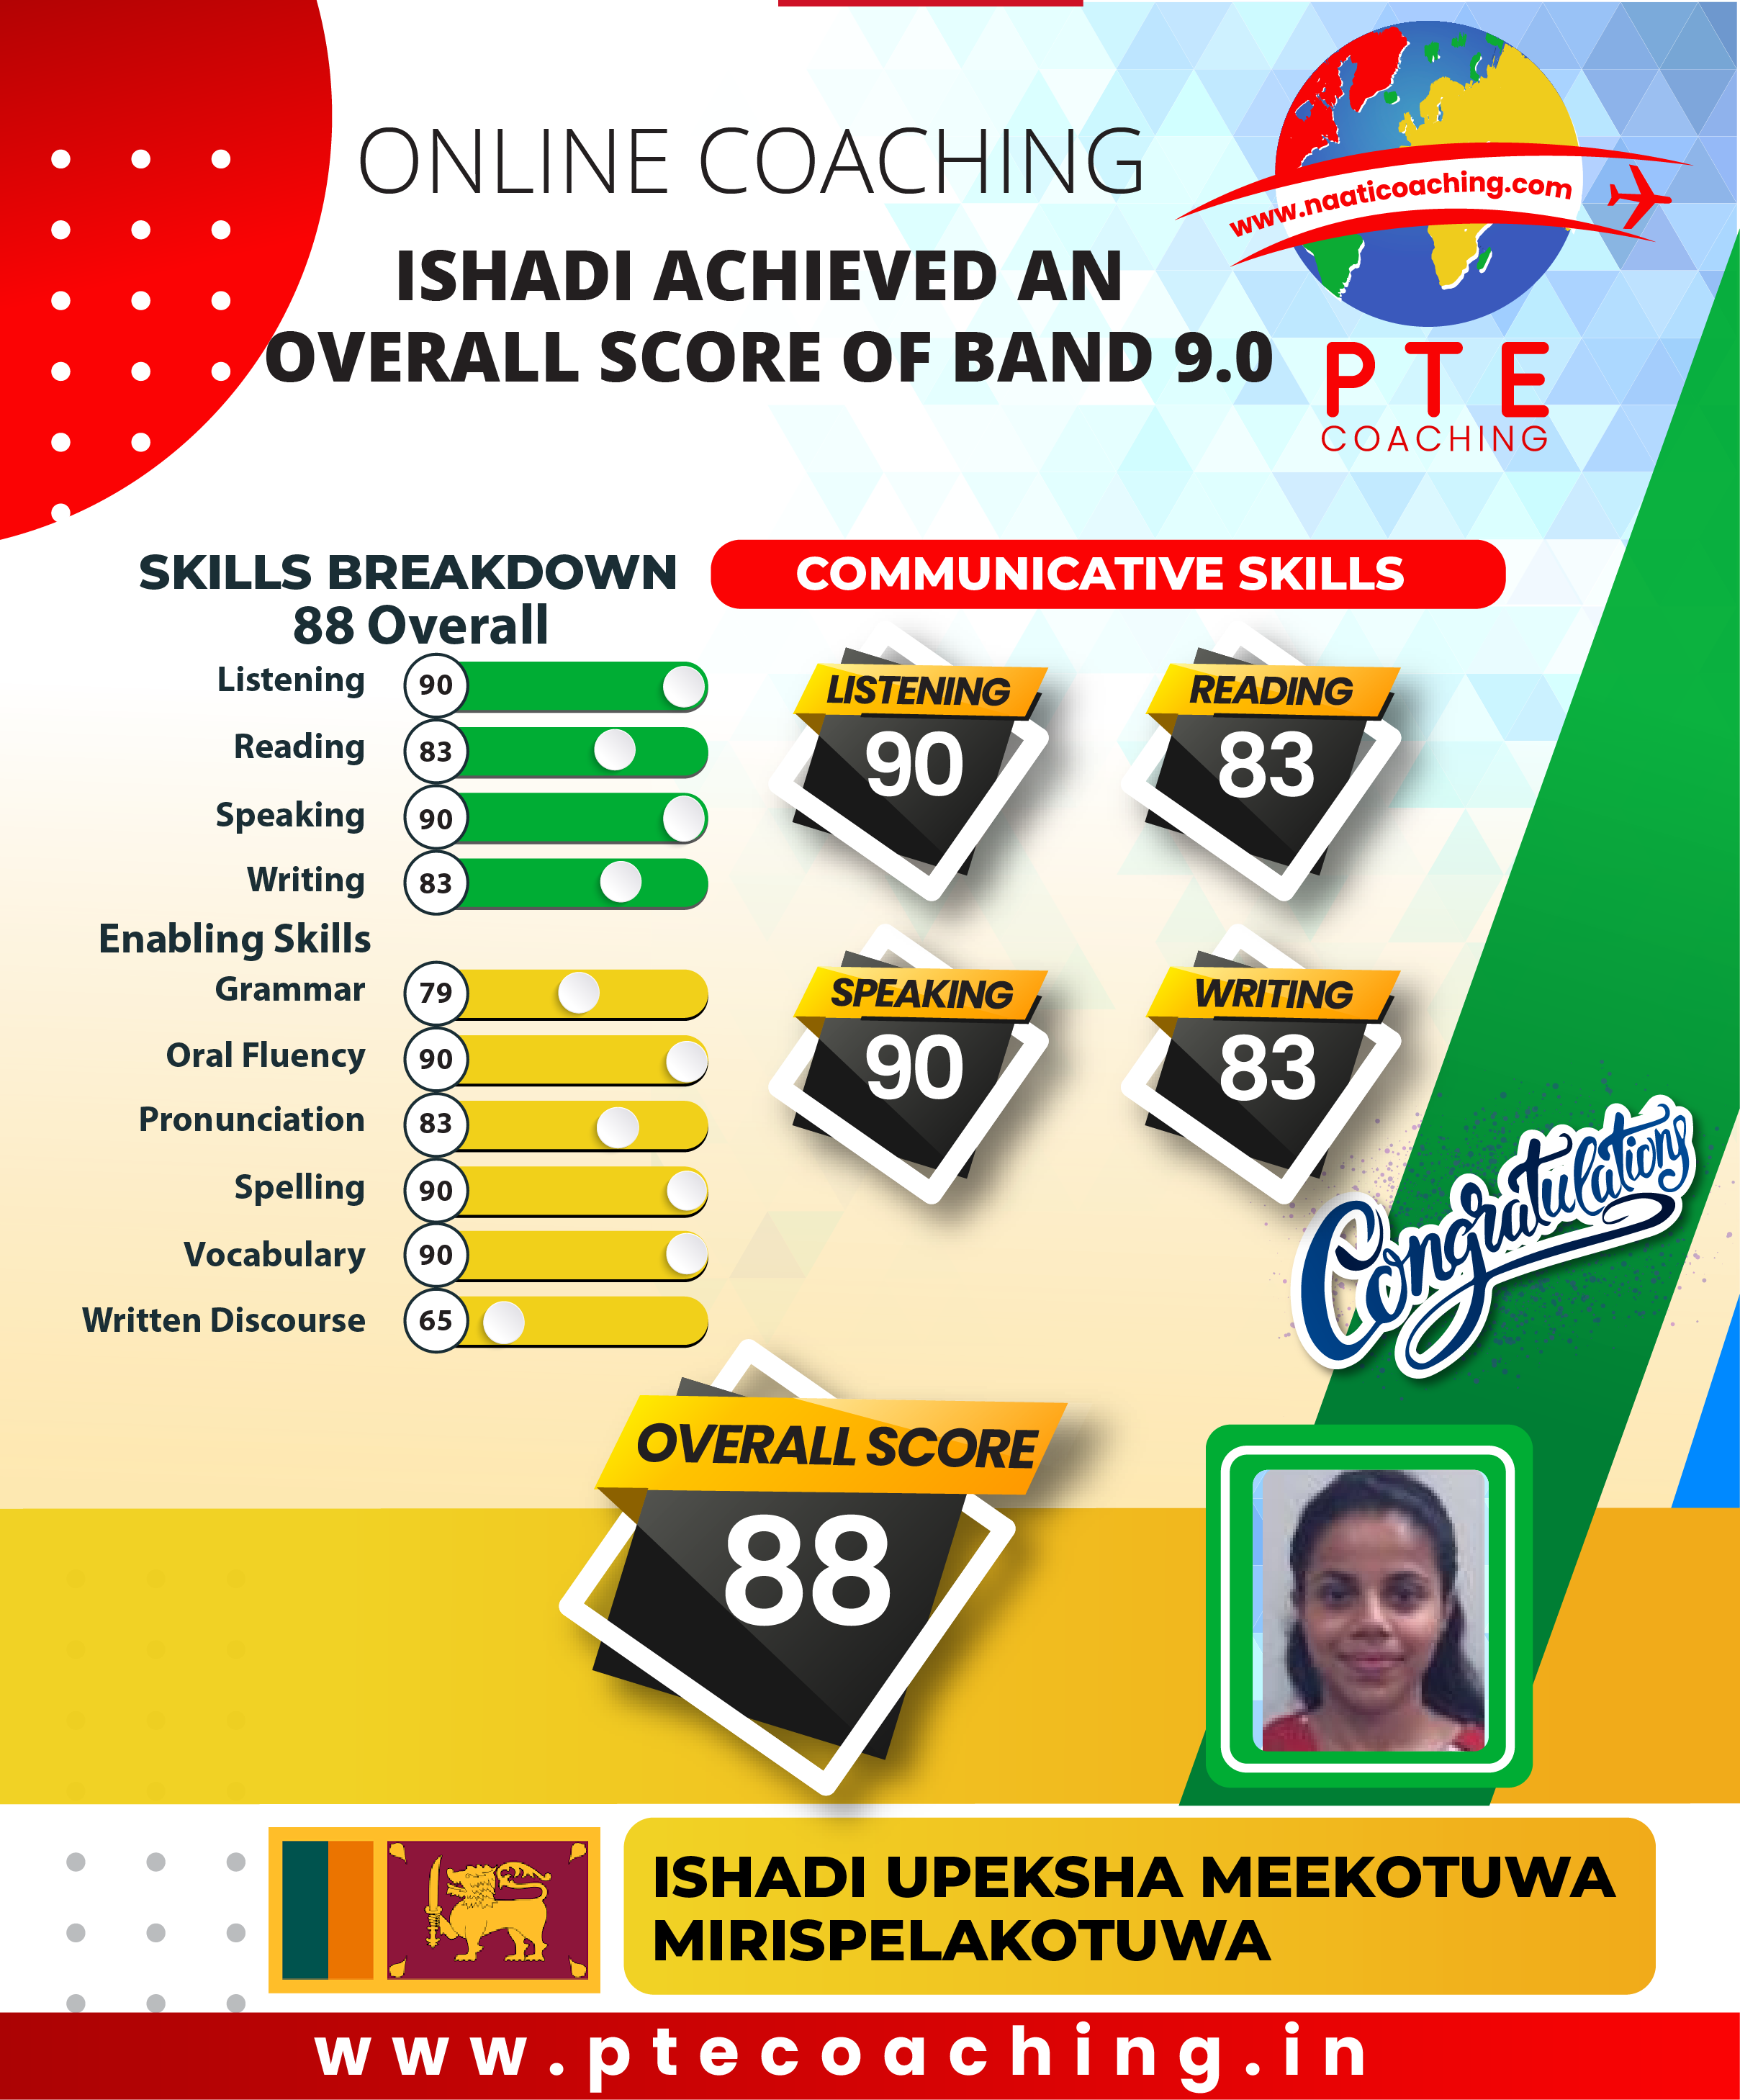 PTE Coaching Scorecard - Ishadi achieved an overall score of band 9.0